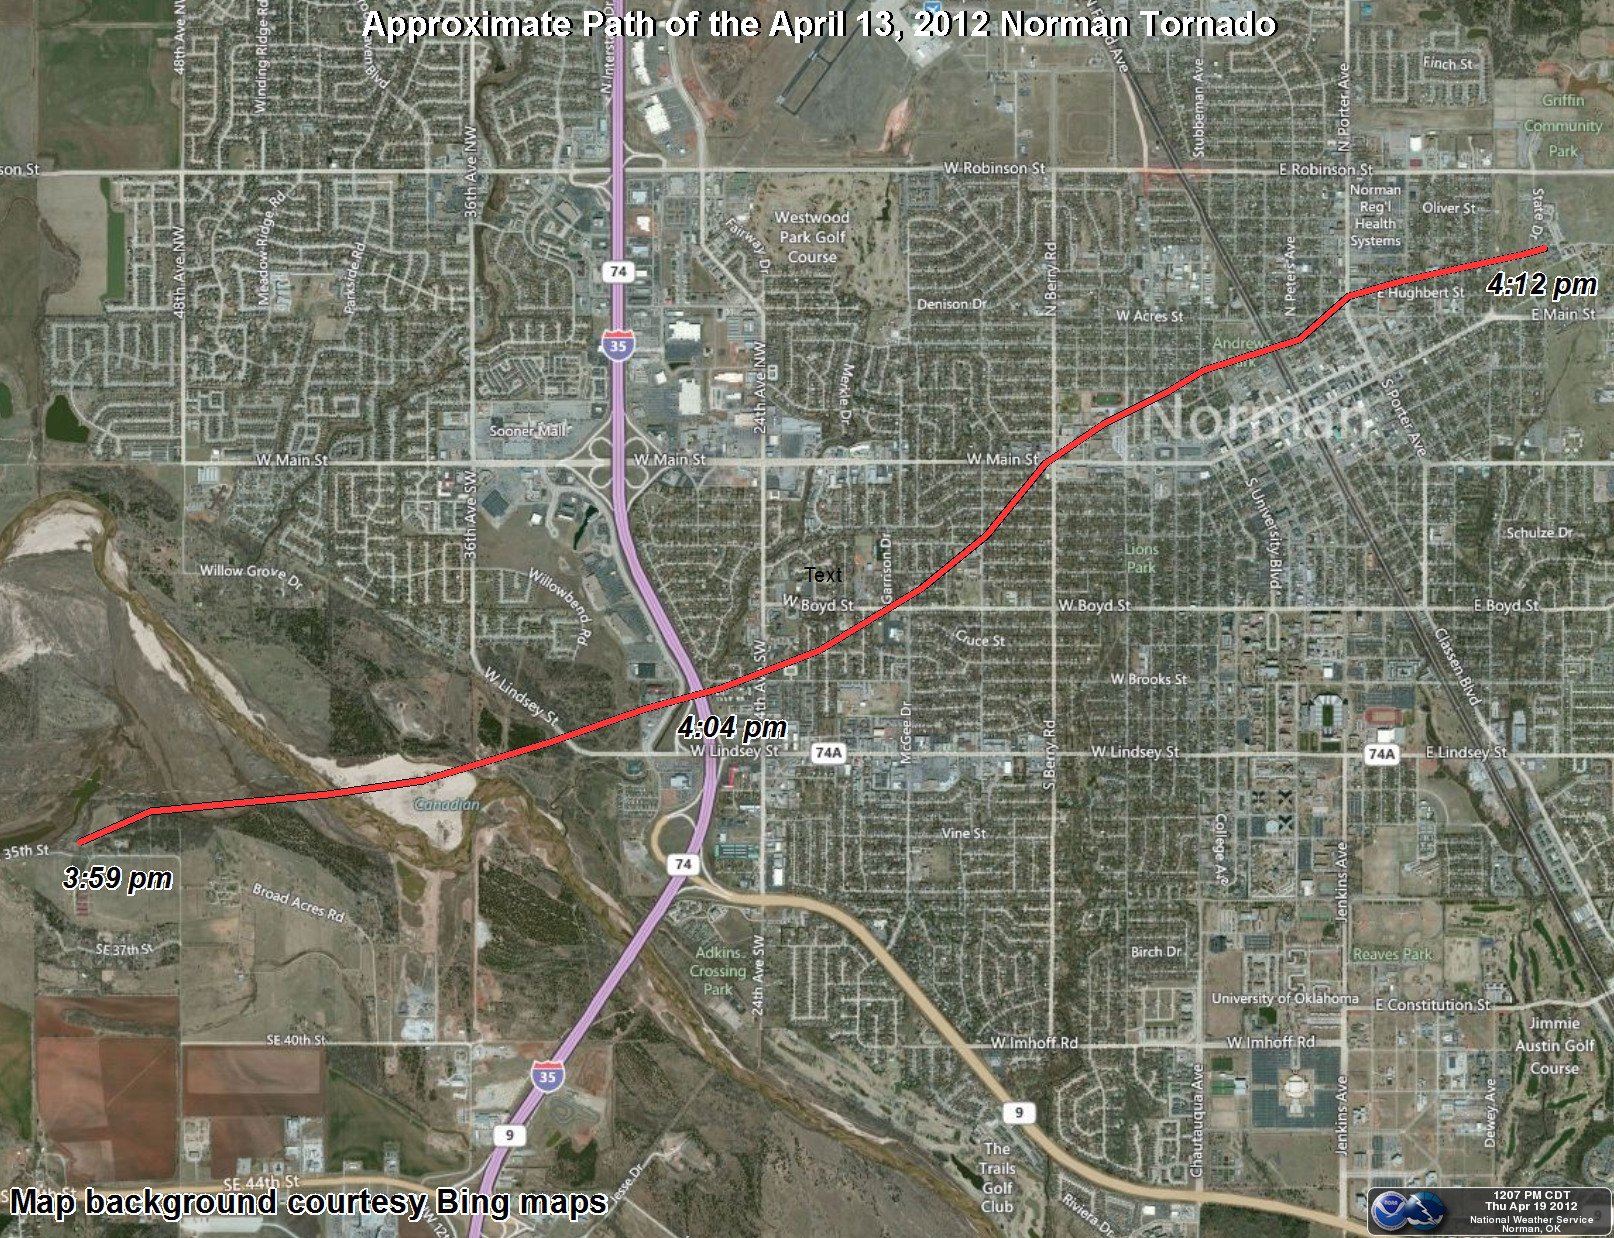 Preliminary Path of the April 13, 2012 Norman, Oklahoma Tornado